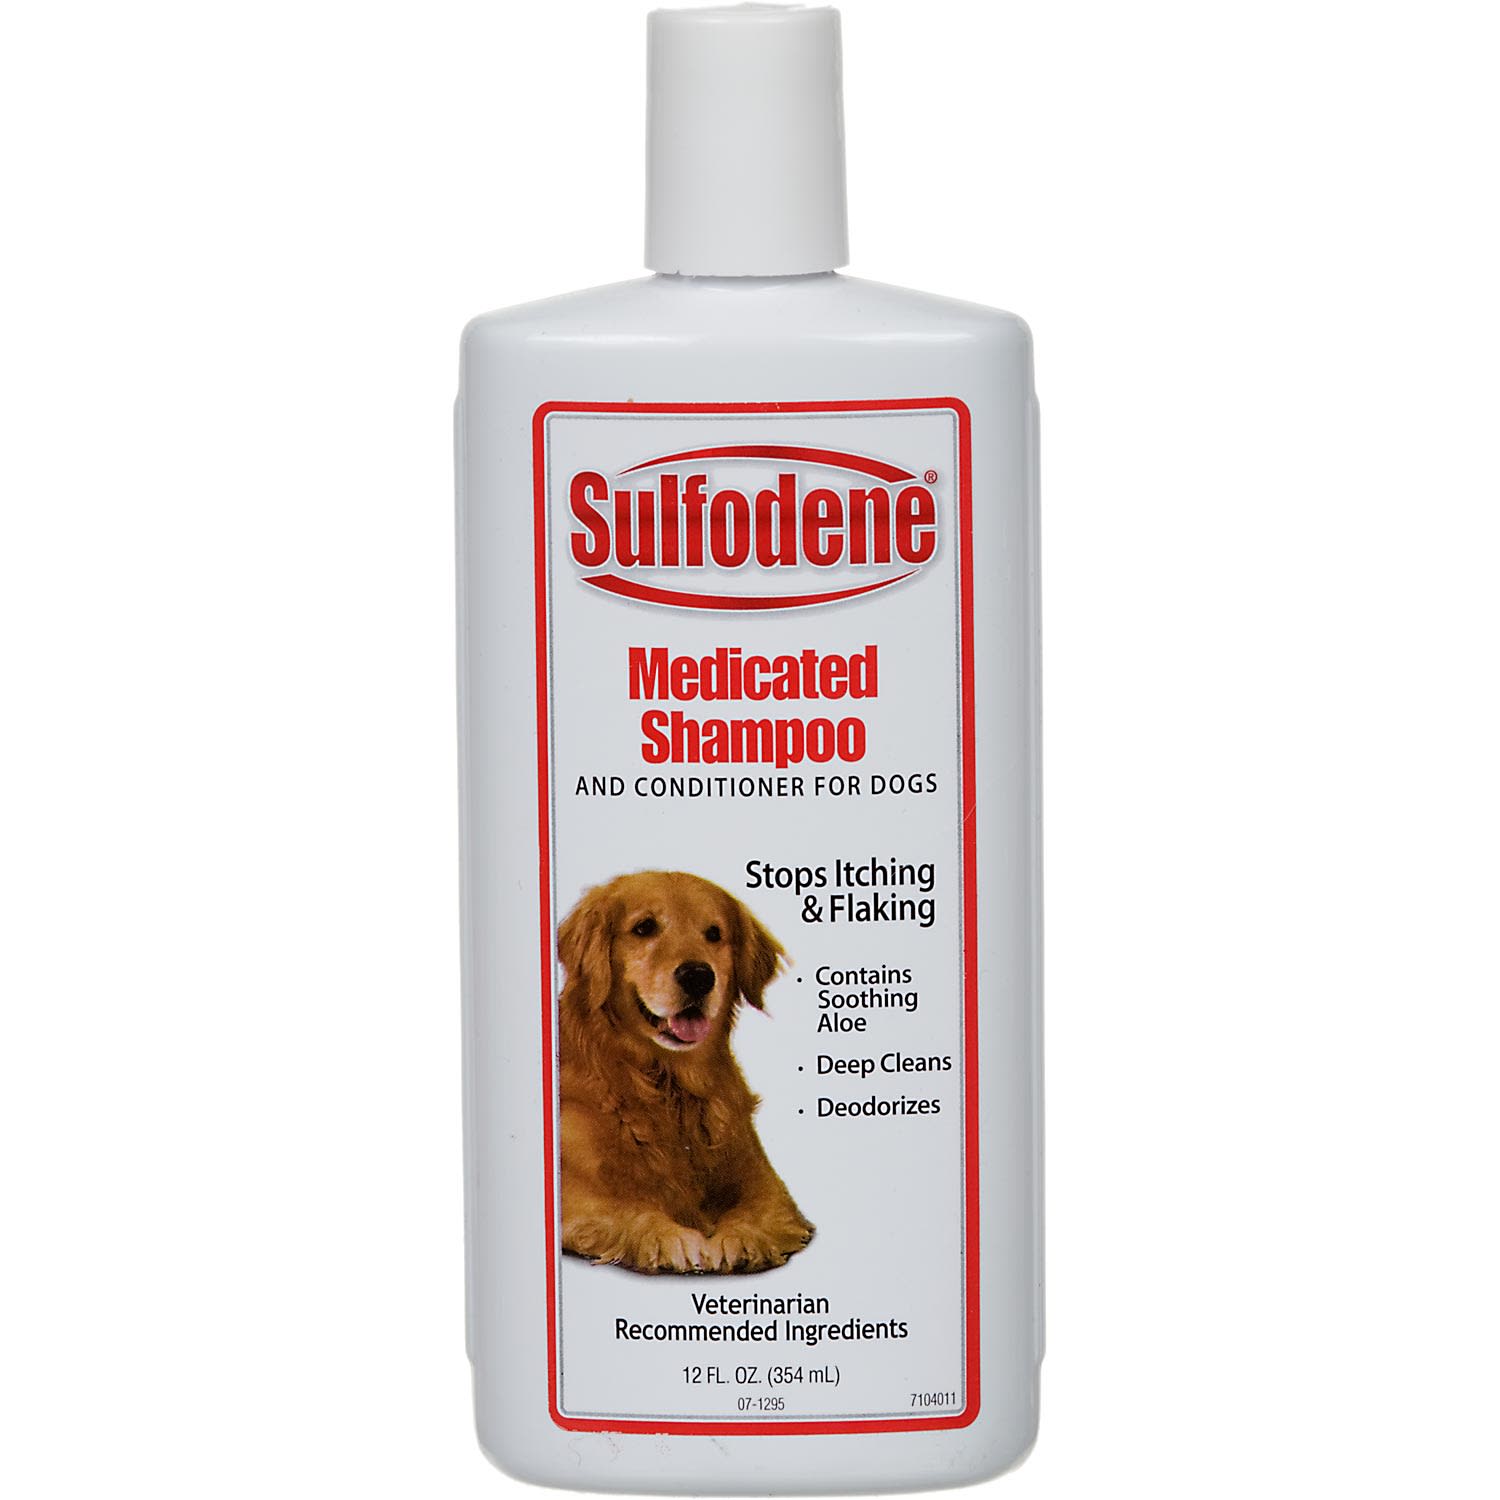 Sulfodene Medicated Dog Shampoo \u0026 